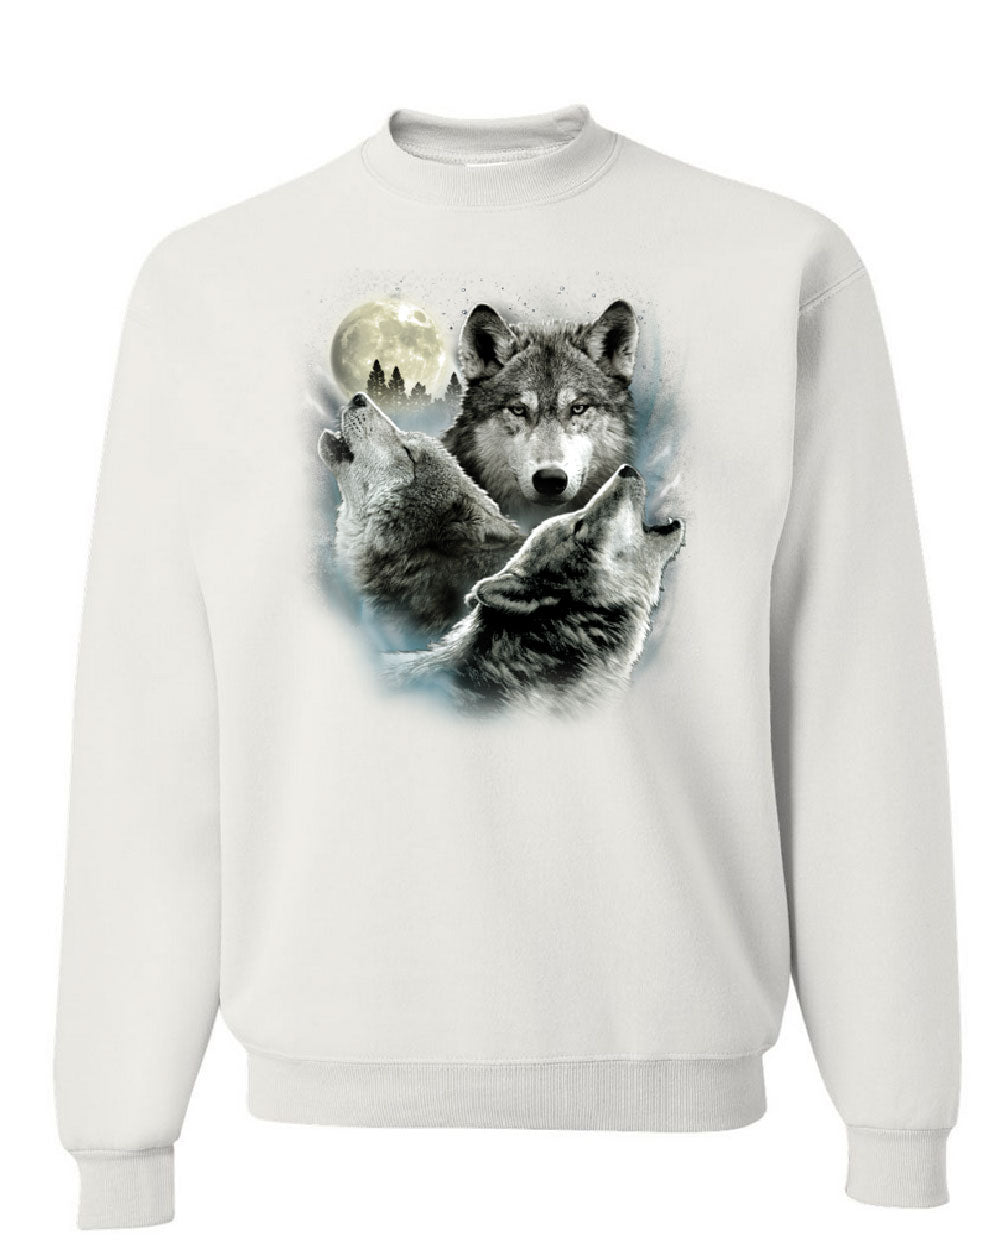 Howling Wolf Pack Sweatshirt Wild Wilderness Animals Nature Moon ...